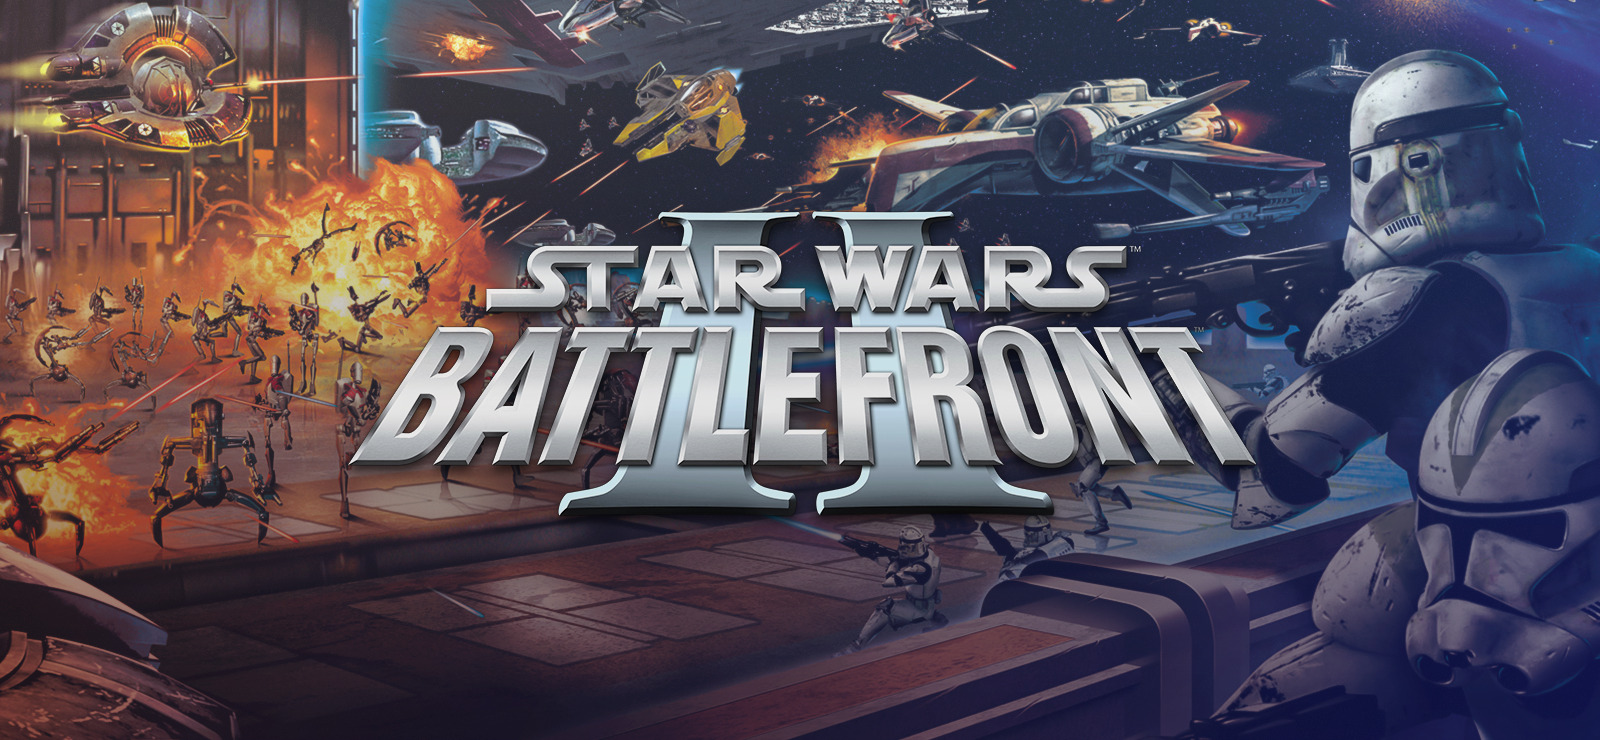 2005 star wars battlefront 2 multiplayer on pc free download